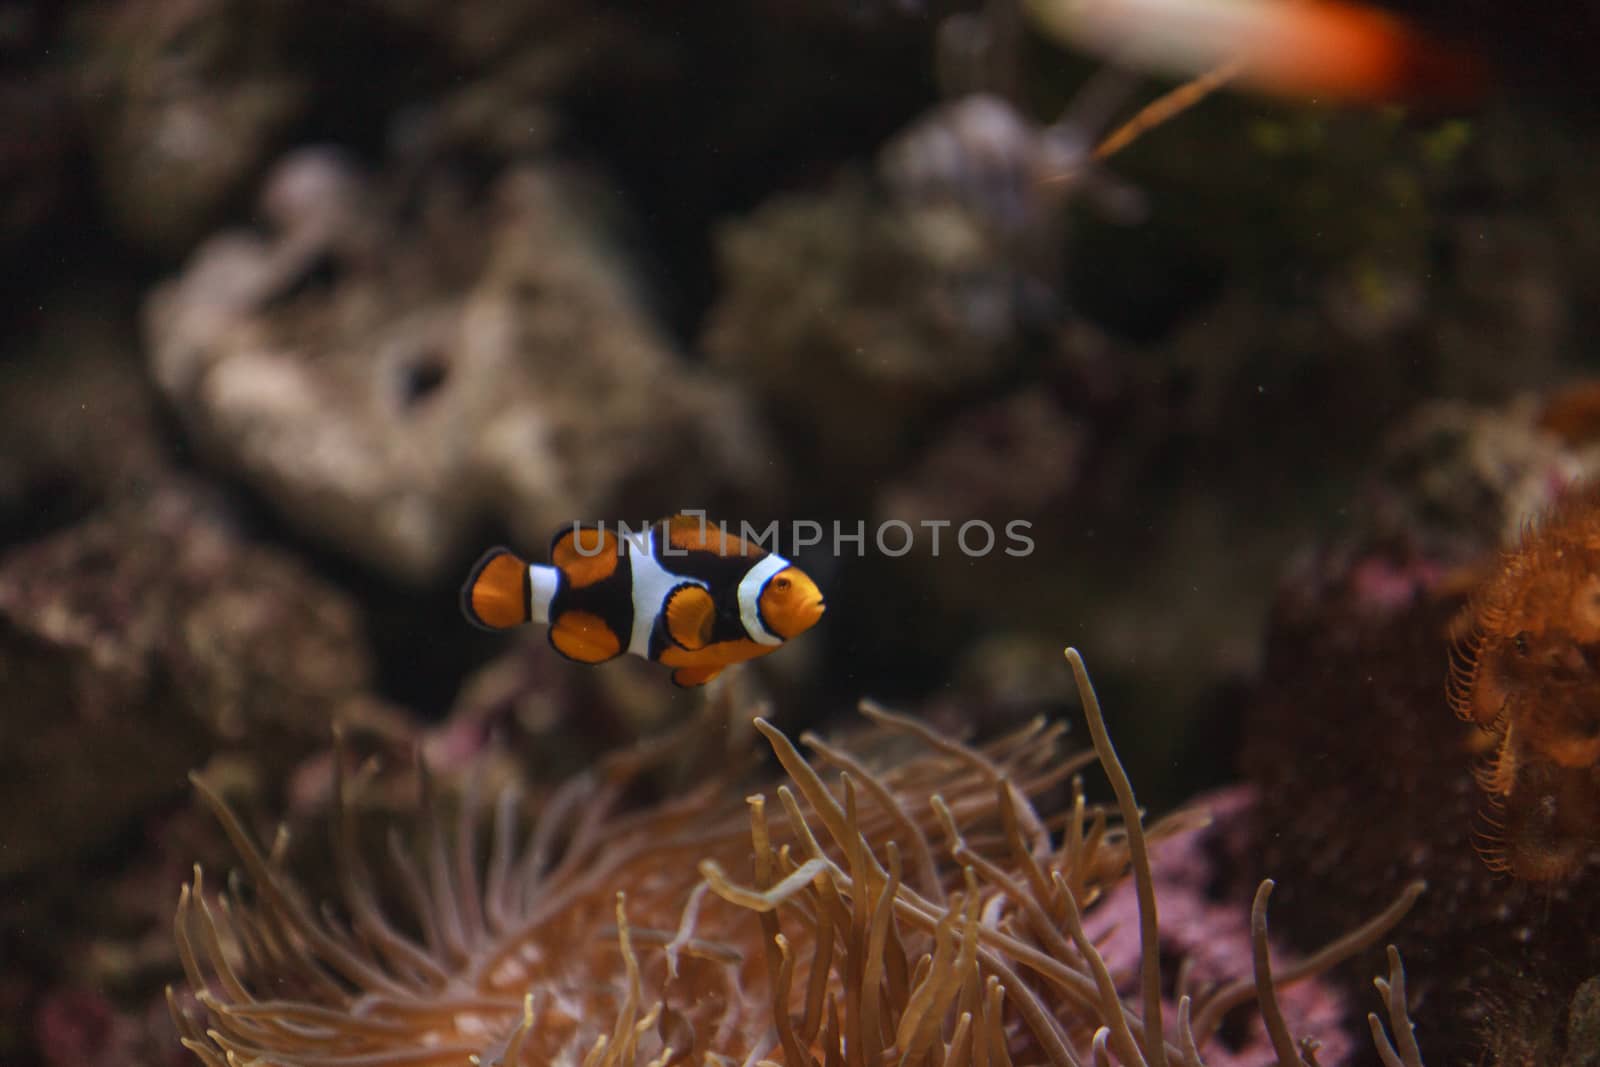 Clownfish, Amphiprioninae by steffstarr